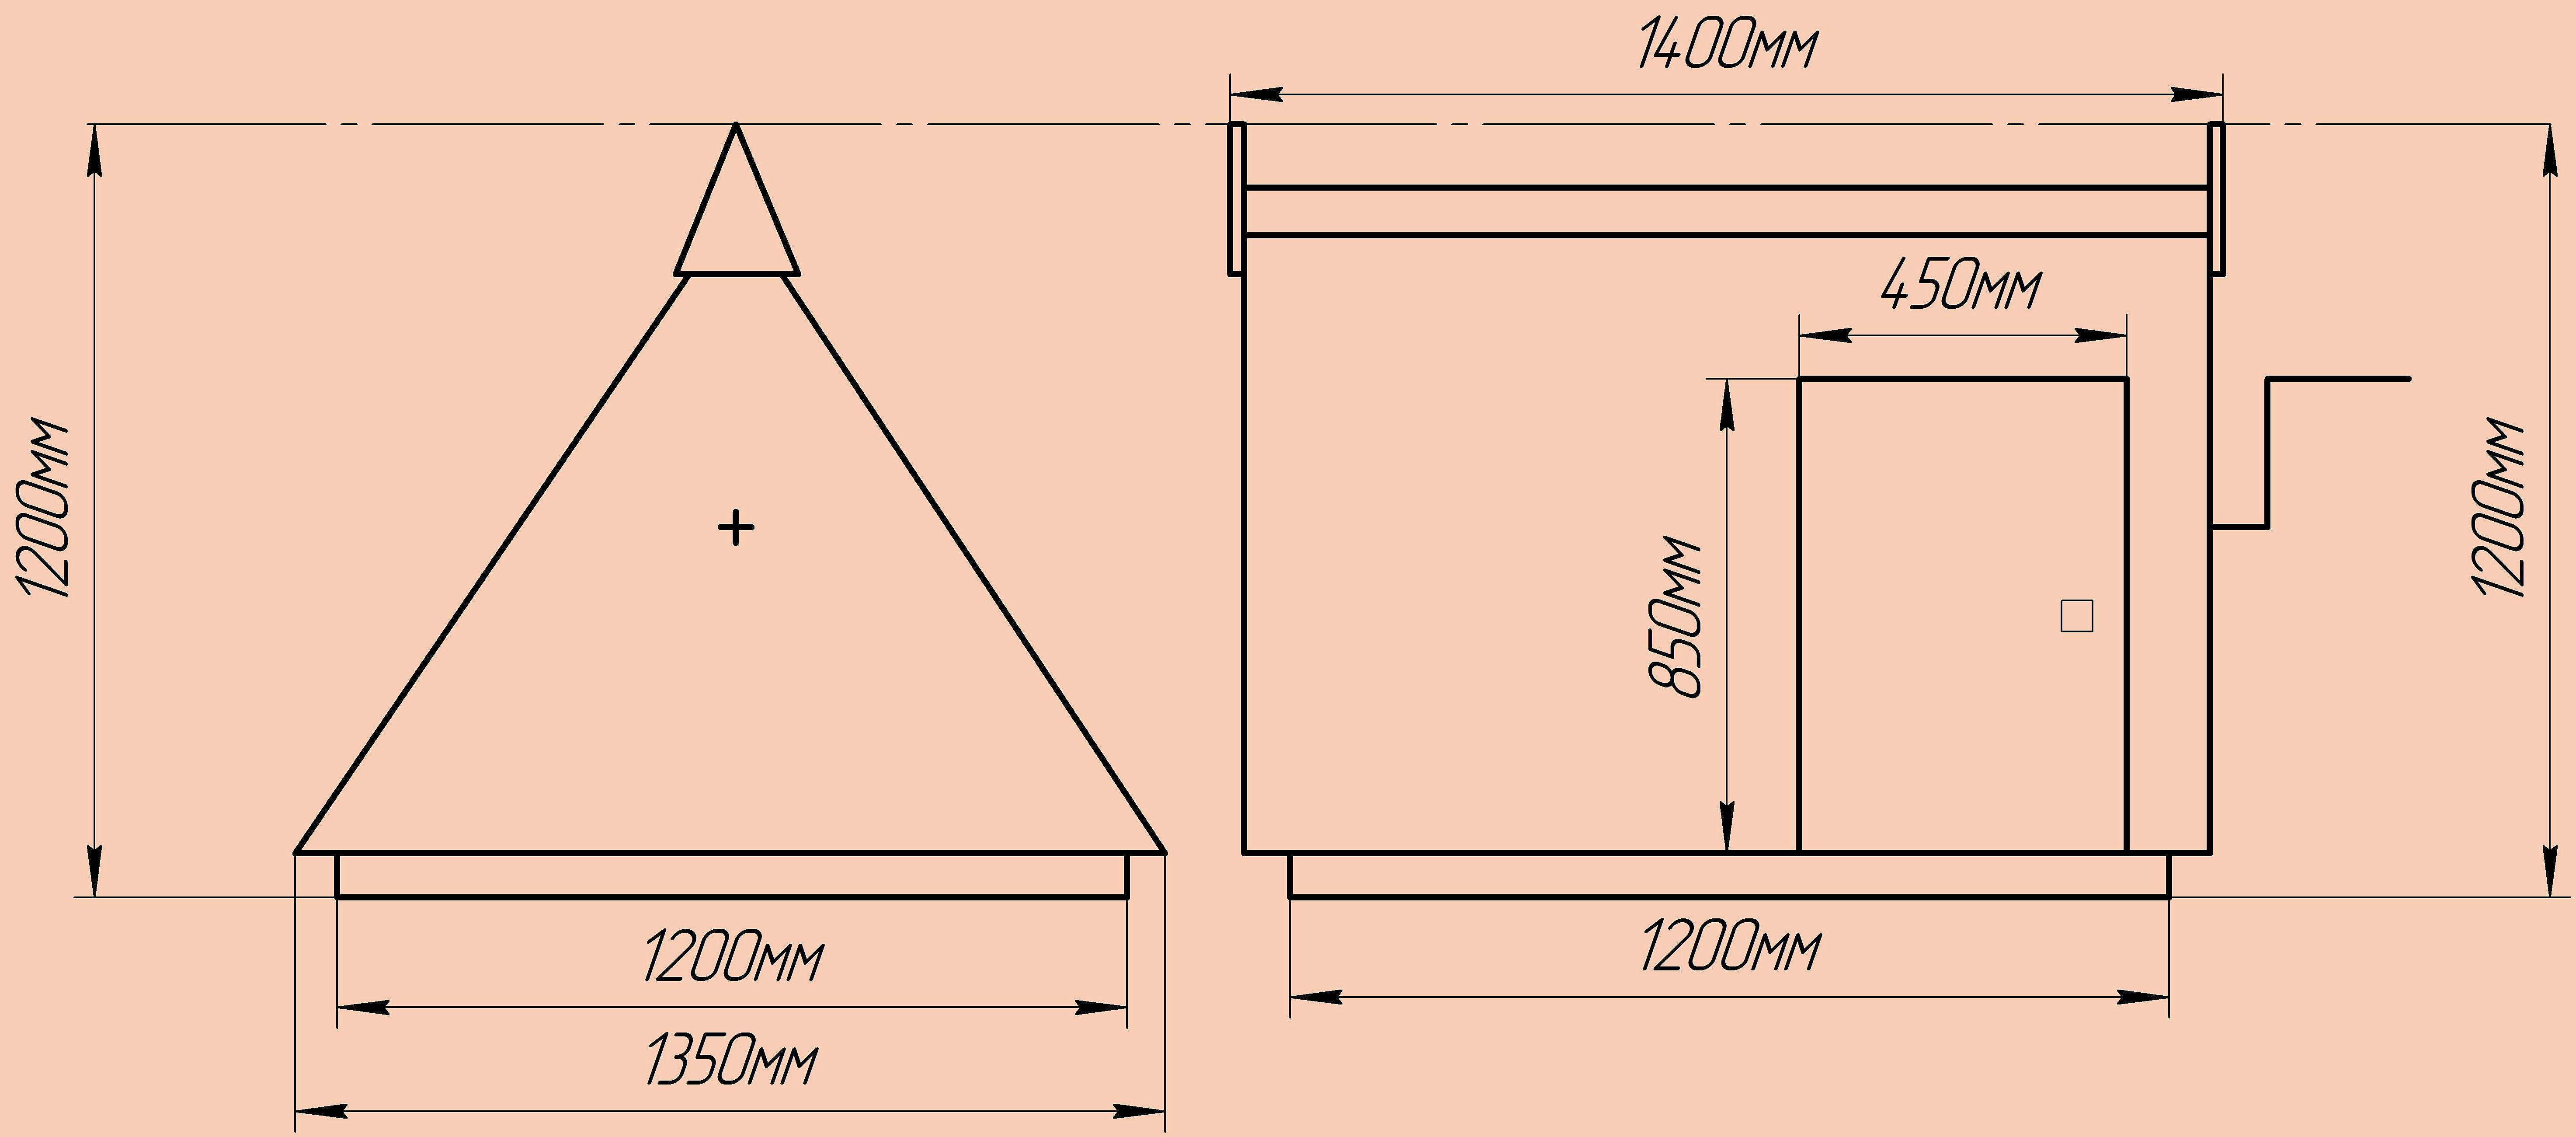 Домик для скважины на даче своими руками: чертеж и фото колодезного домика